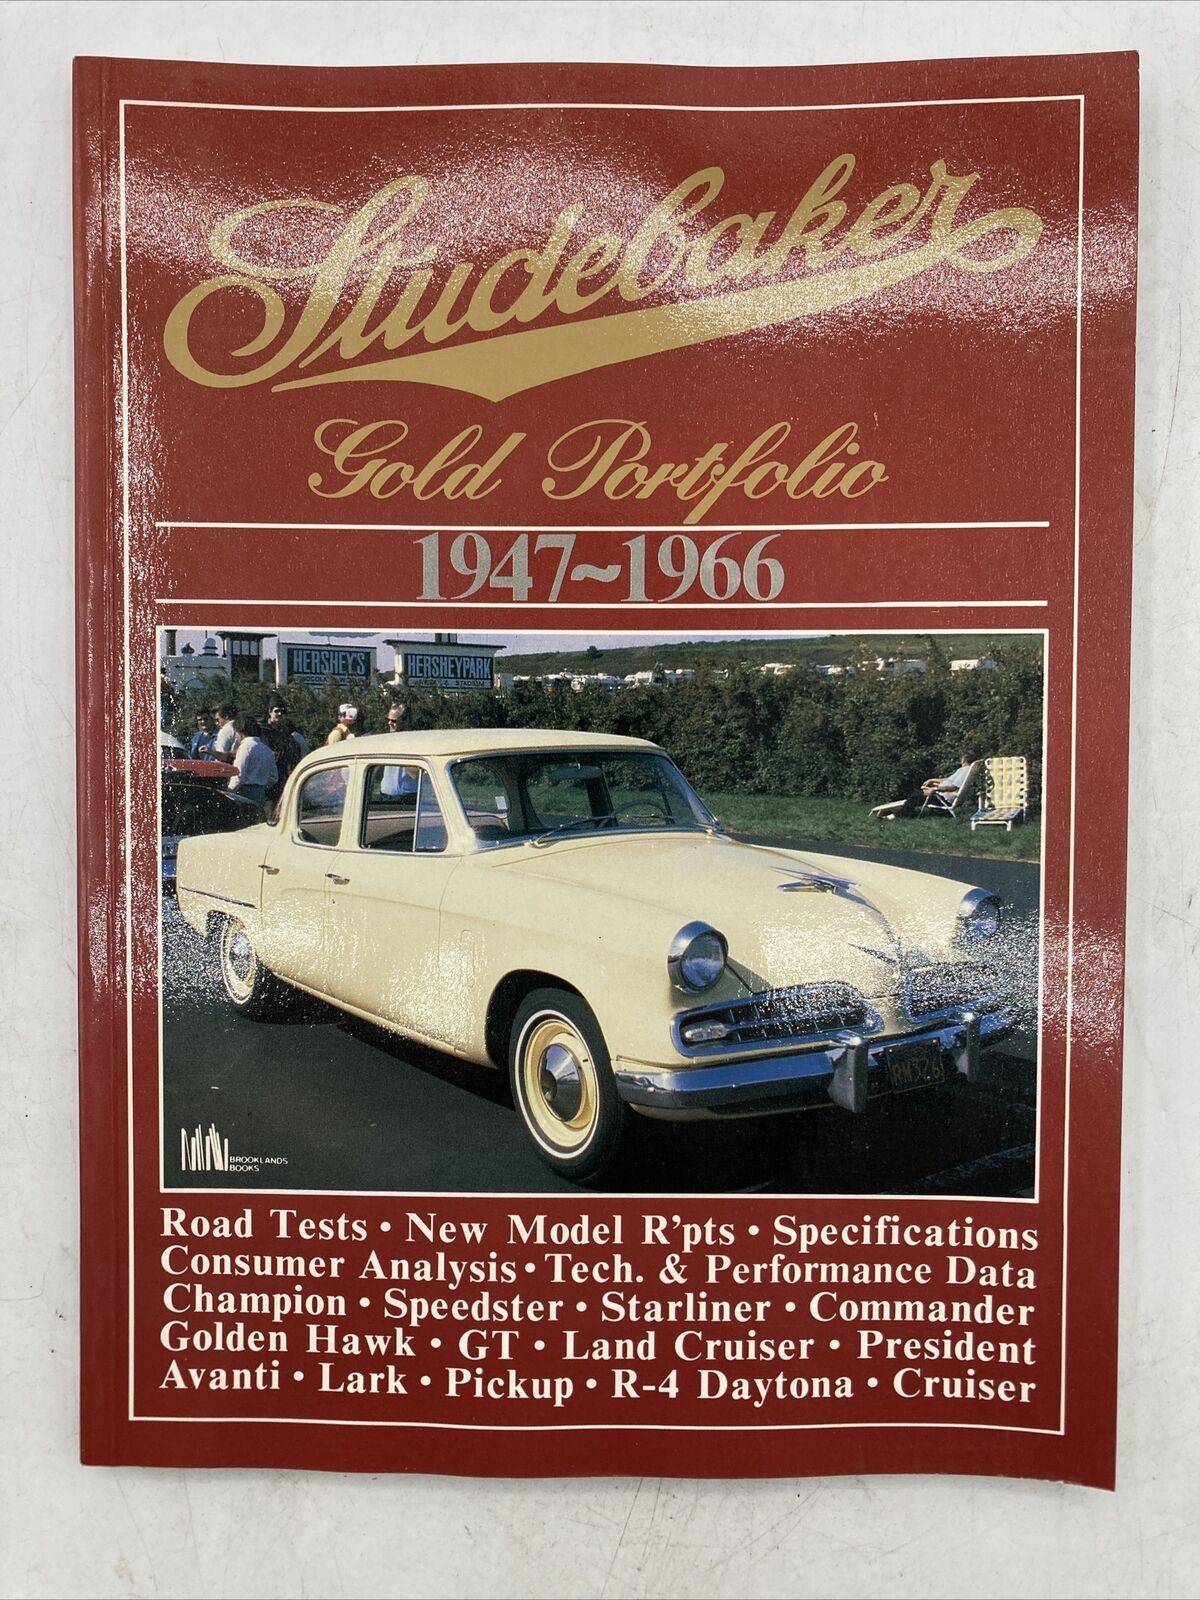 Studebaker Gold Portfolio 1947-1966 Brooklands Books R M Clarke 1990 Road Test